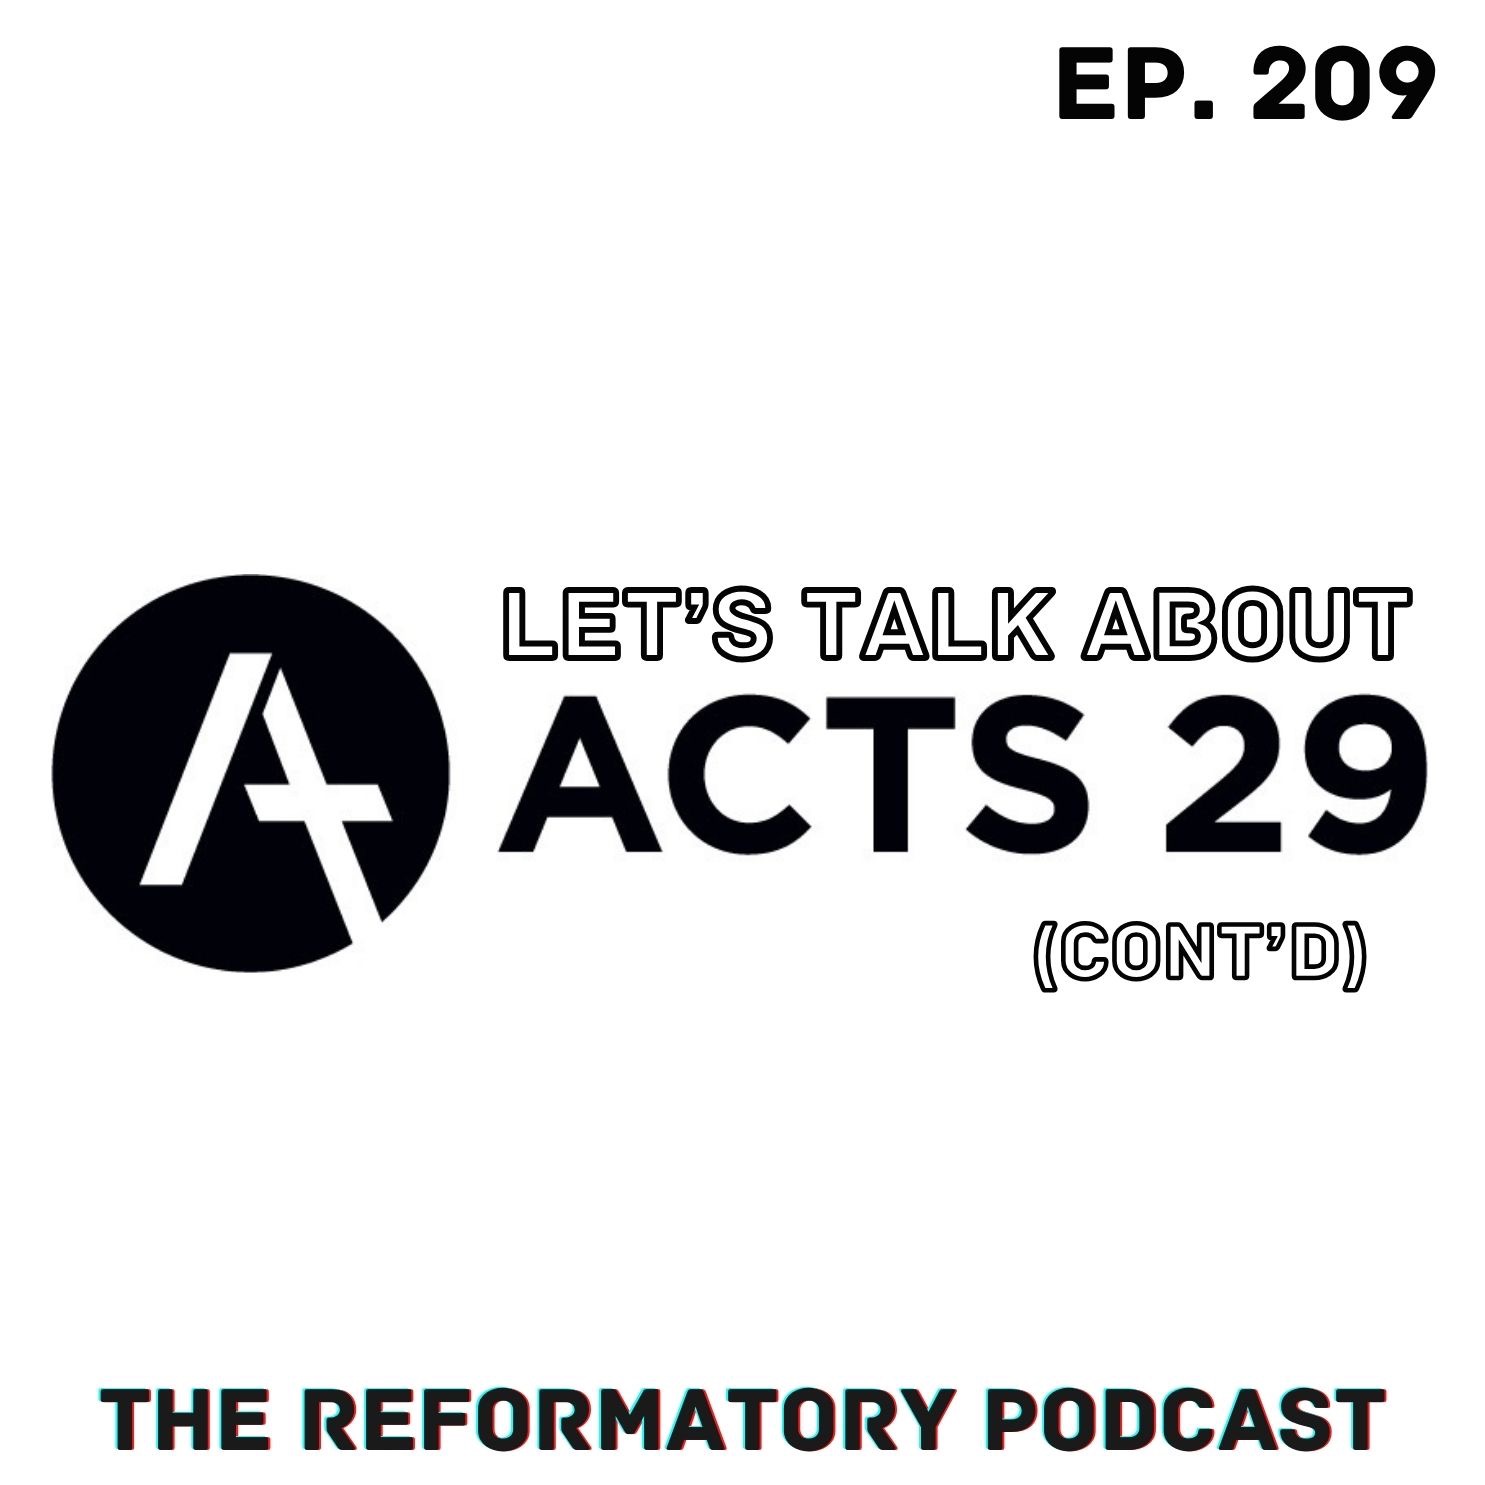 Let’s Talk About Acts 29 (Cont’d)